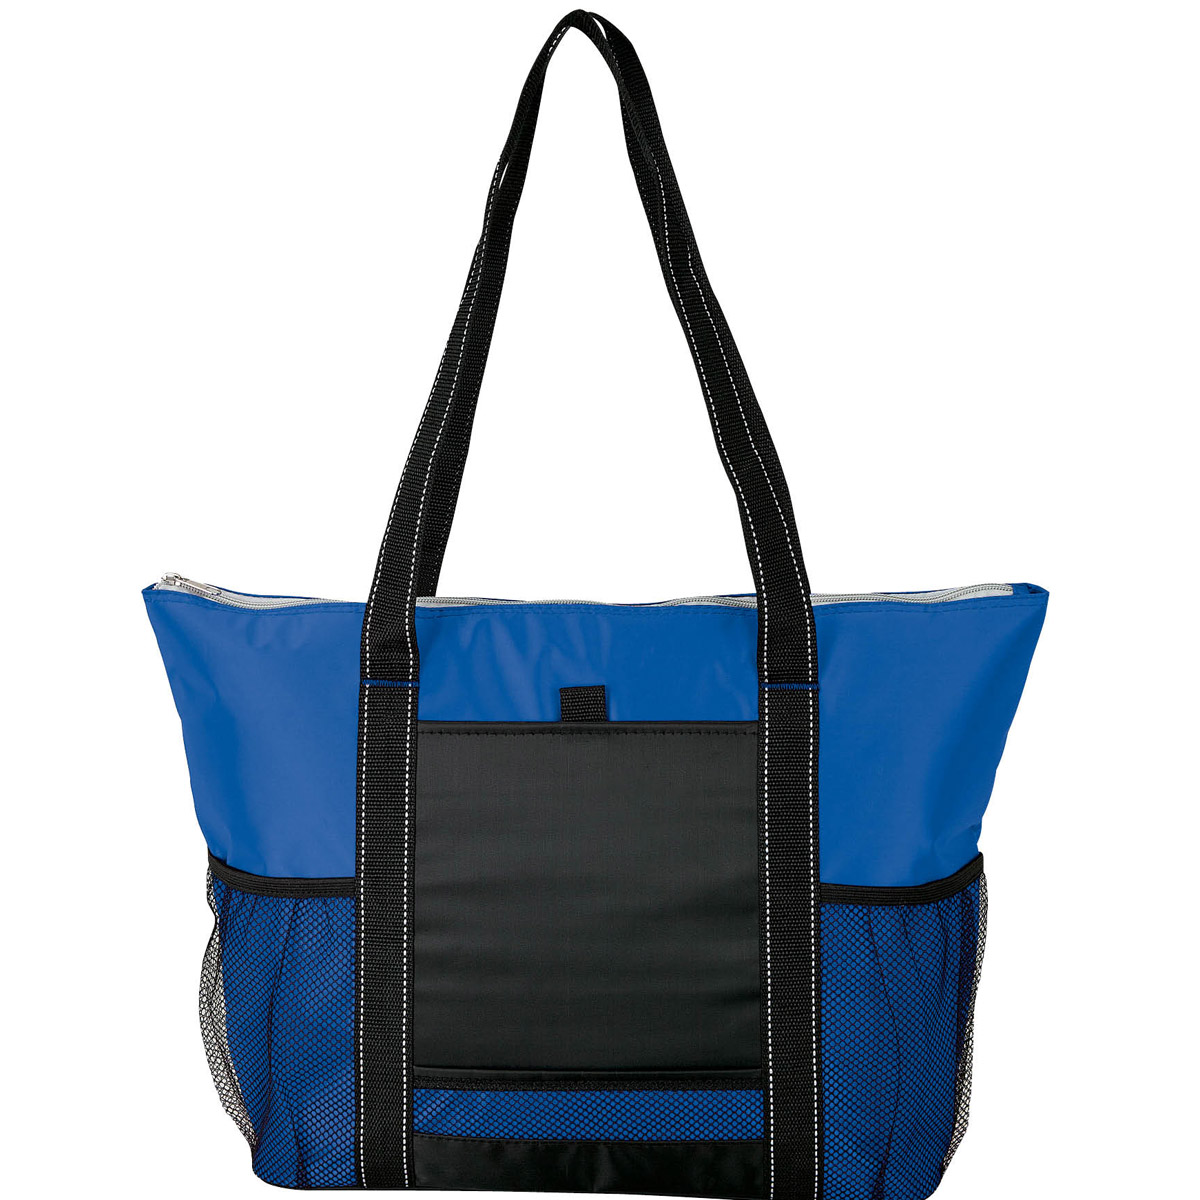 Blue Cooler Tote Bag (15"W x 6"D x 13.5"H)